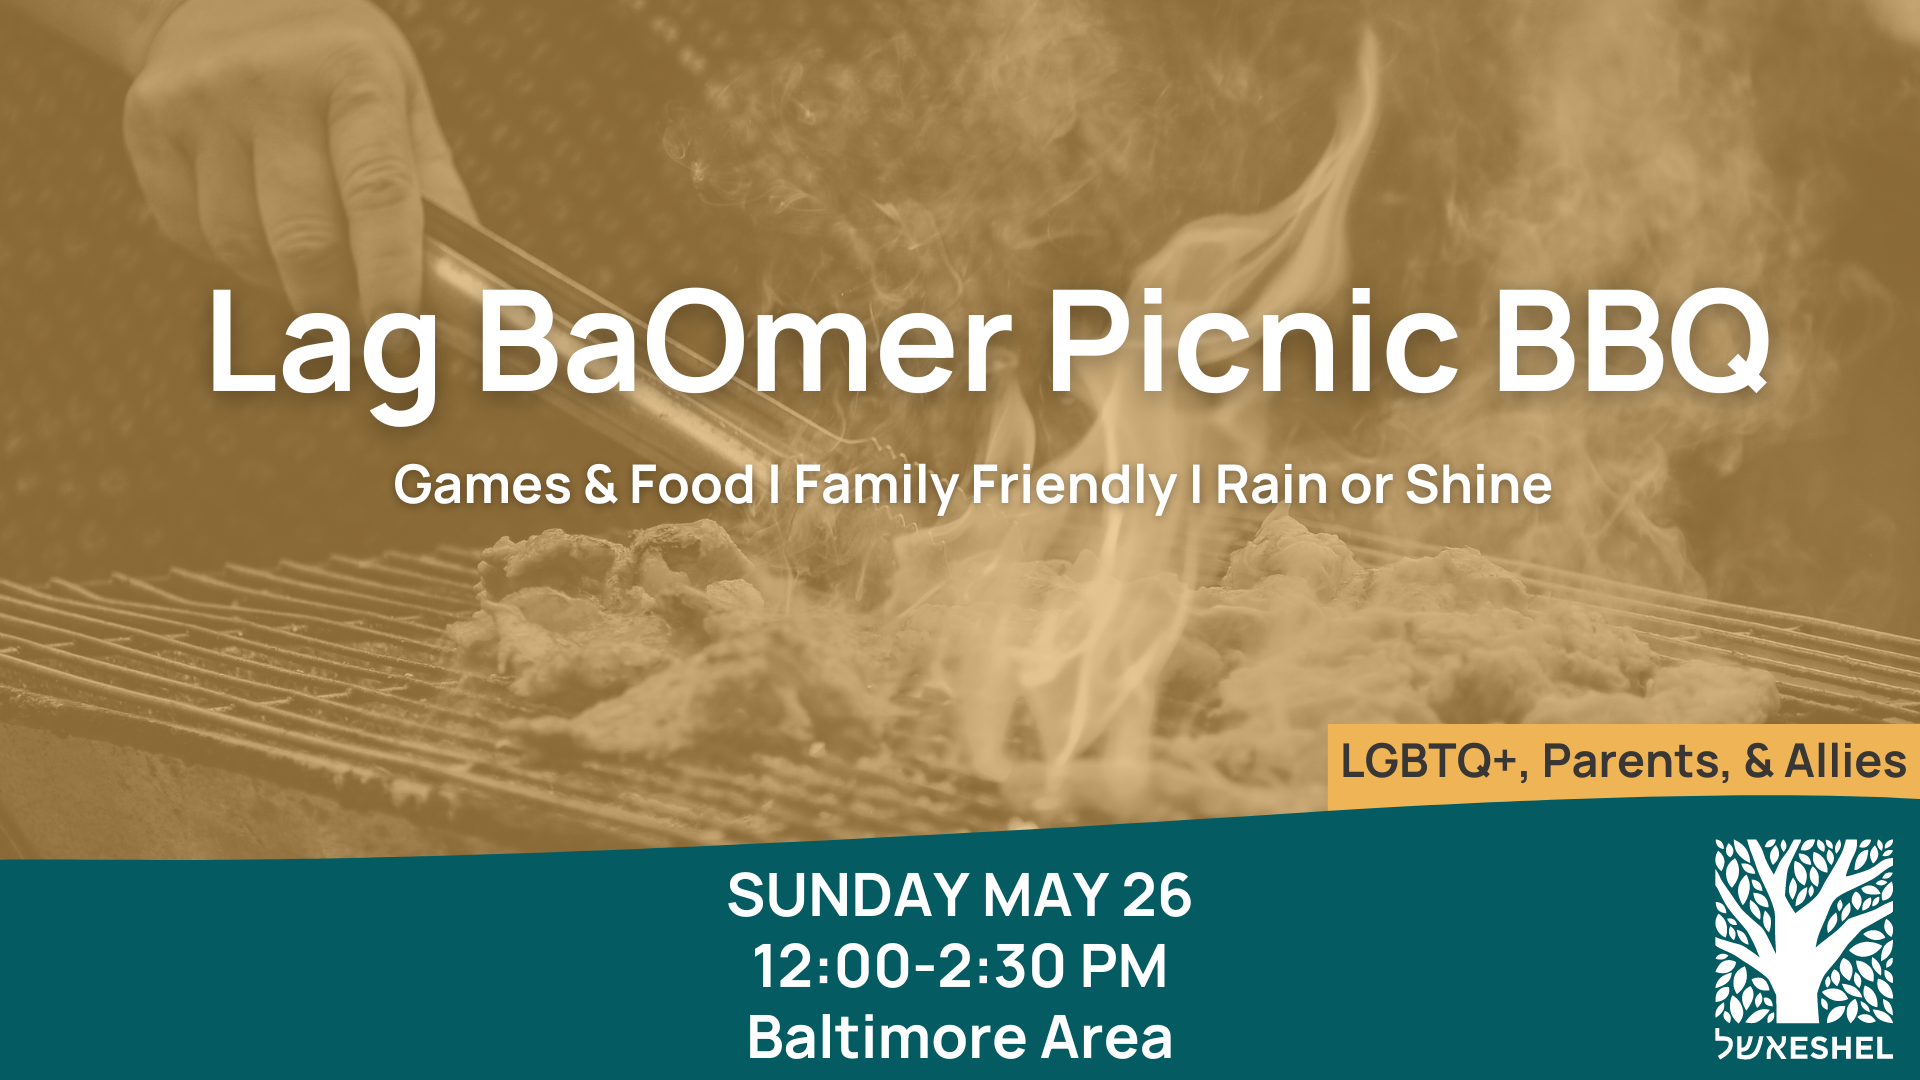 Lag baOmer Picnic BBQ | Games & Food - Family Friendly - Rain or Shine | Sunday May 26, 12:00 - 2:30 PM, Waterloo Park Elkridge MD